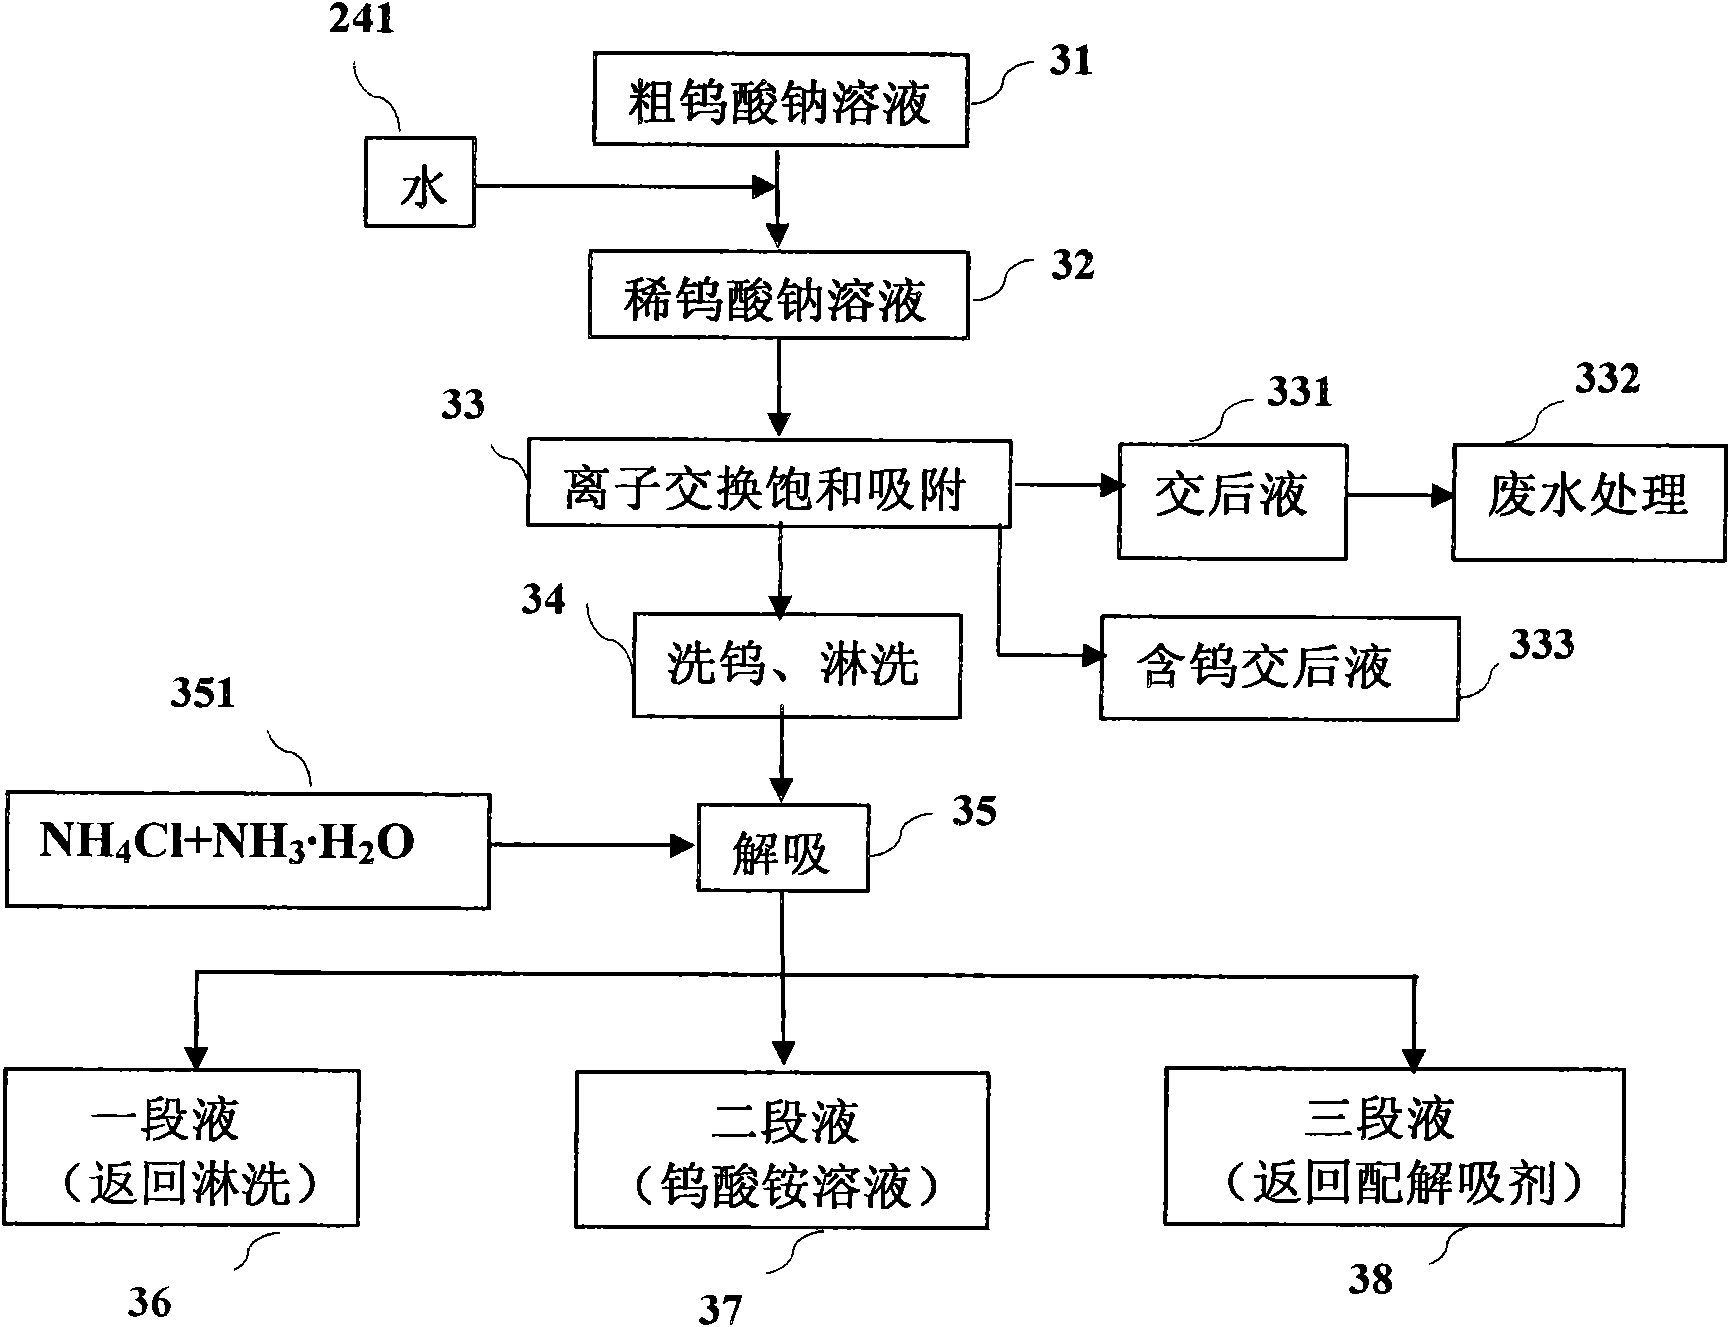 Process for preparing high-purity ammonium paratungstate